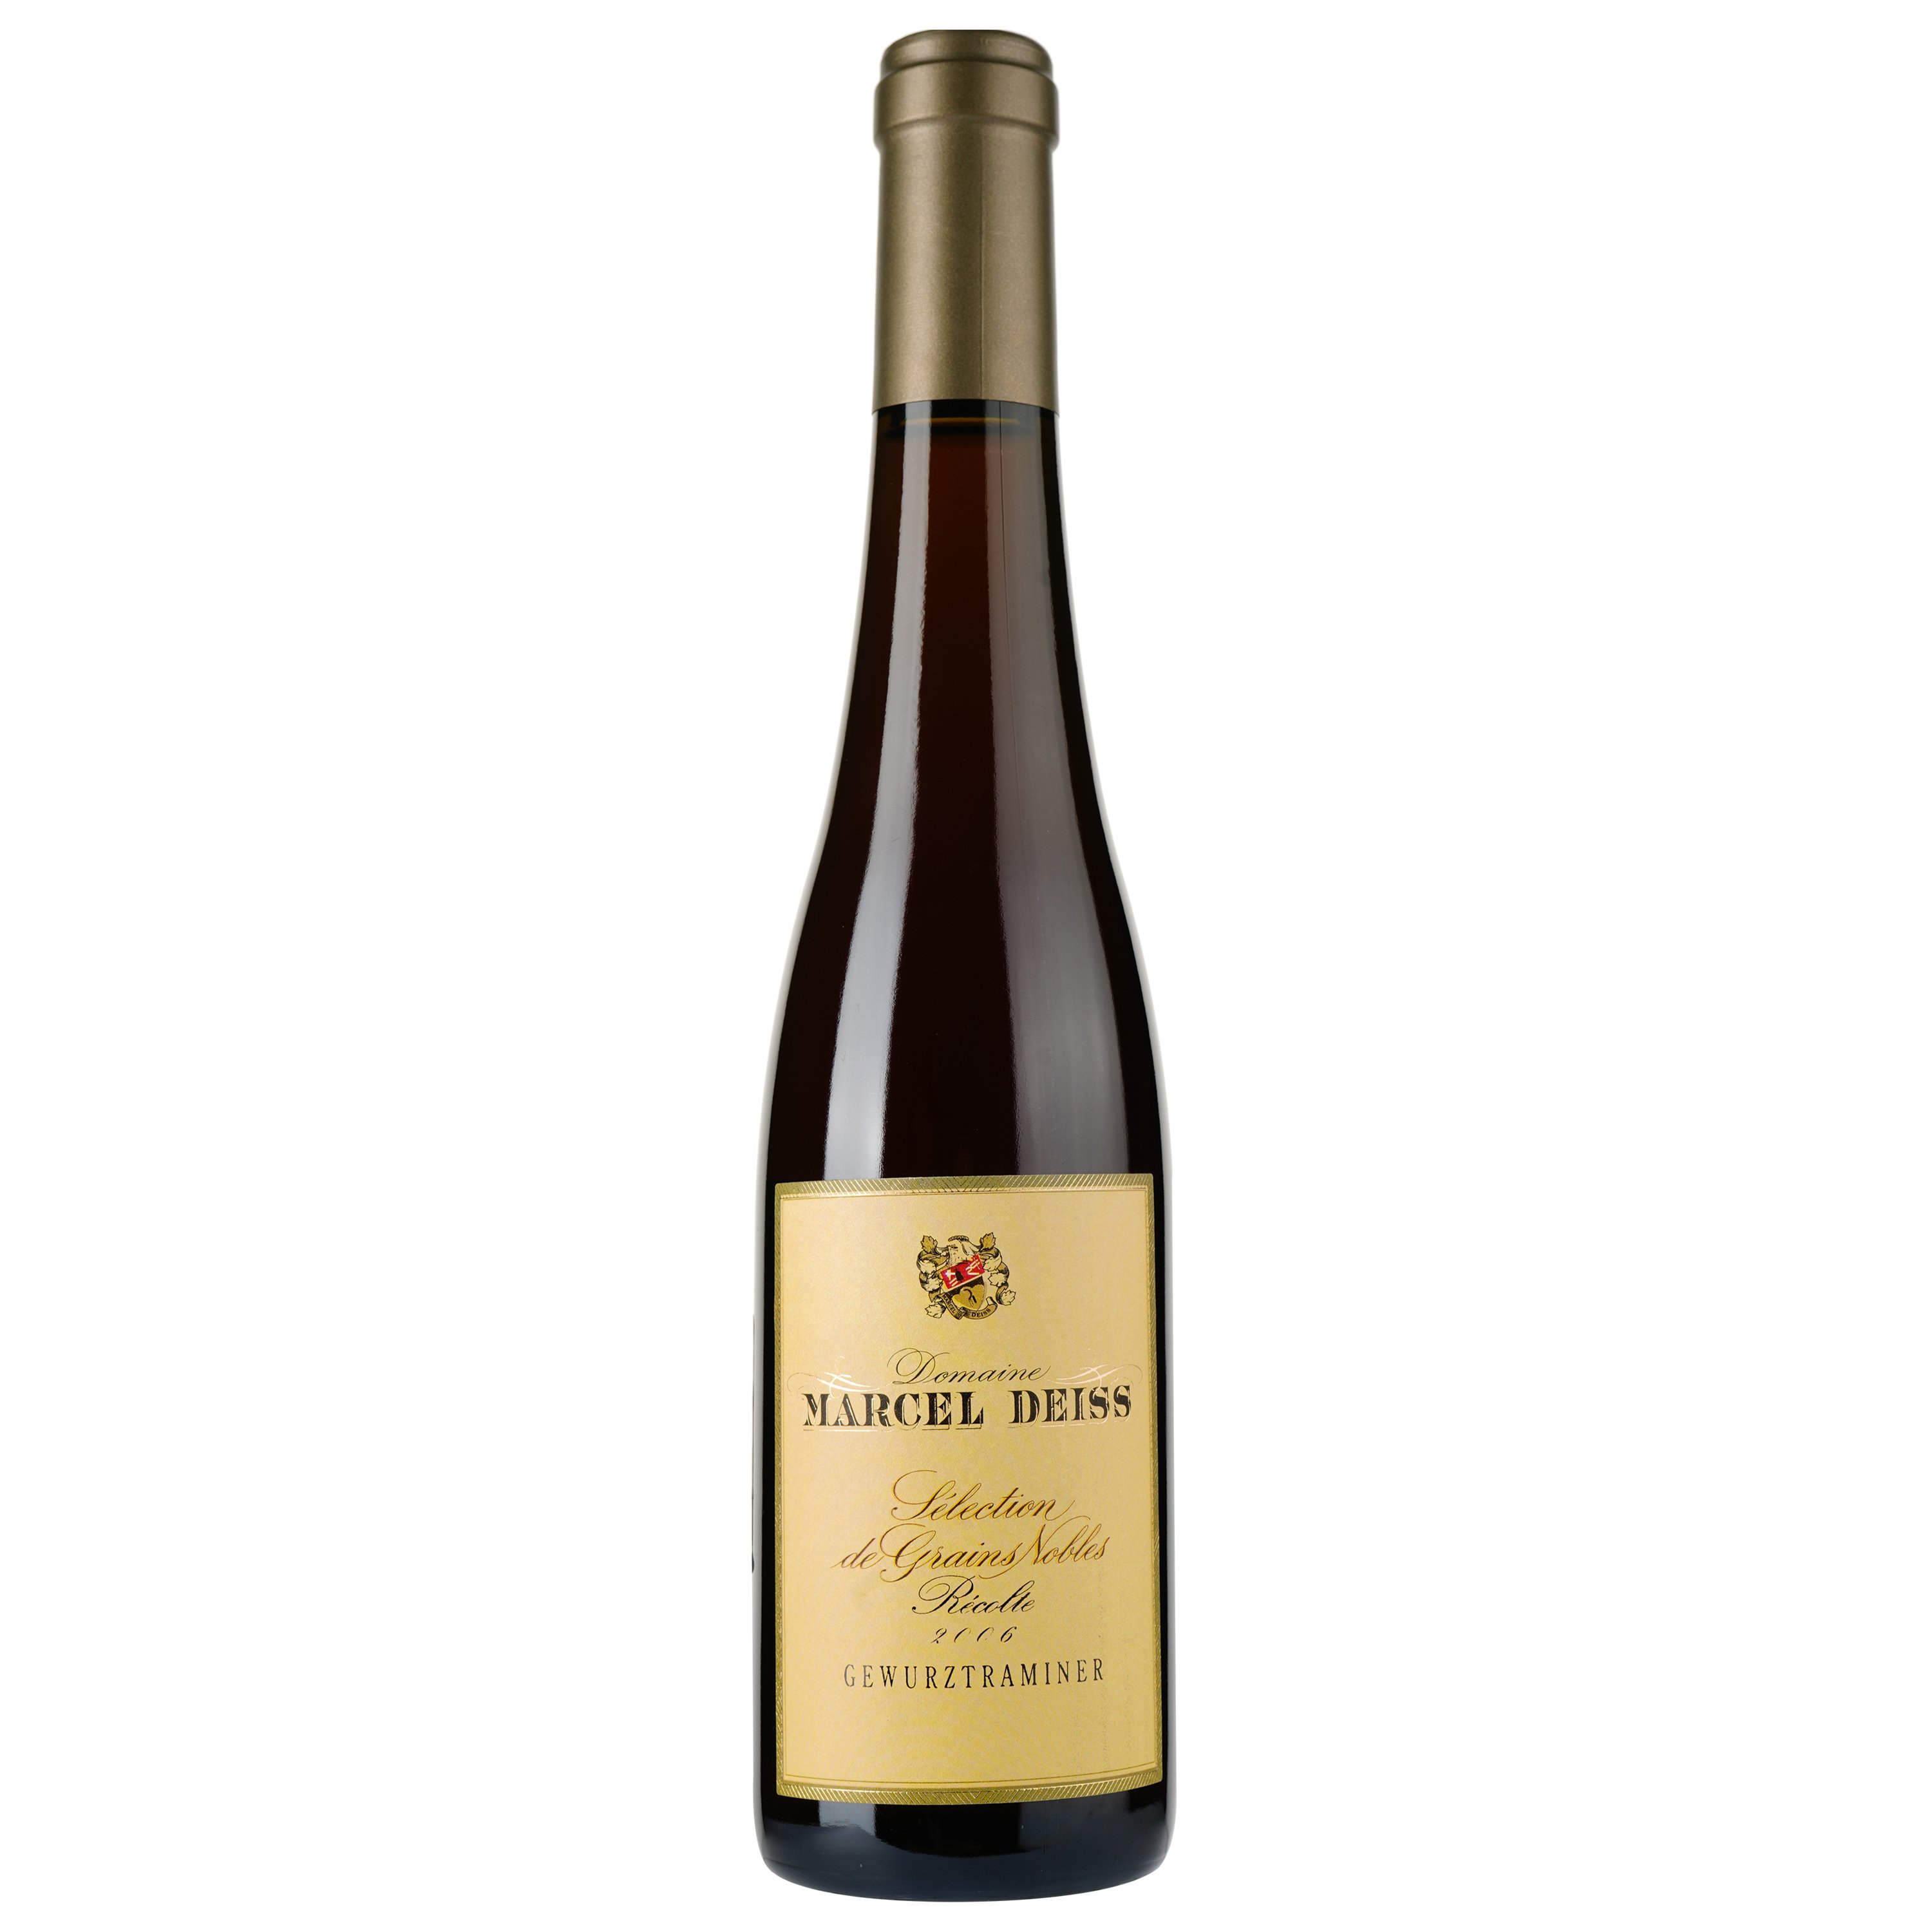 Вино Domaine Marcel Deiss Alsace Gewurztraminer Selection de Grains Nobles 2006 AOC, біле, солодке, 0,375 л - фото 1